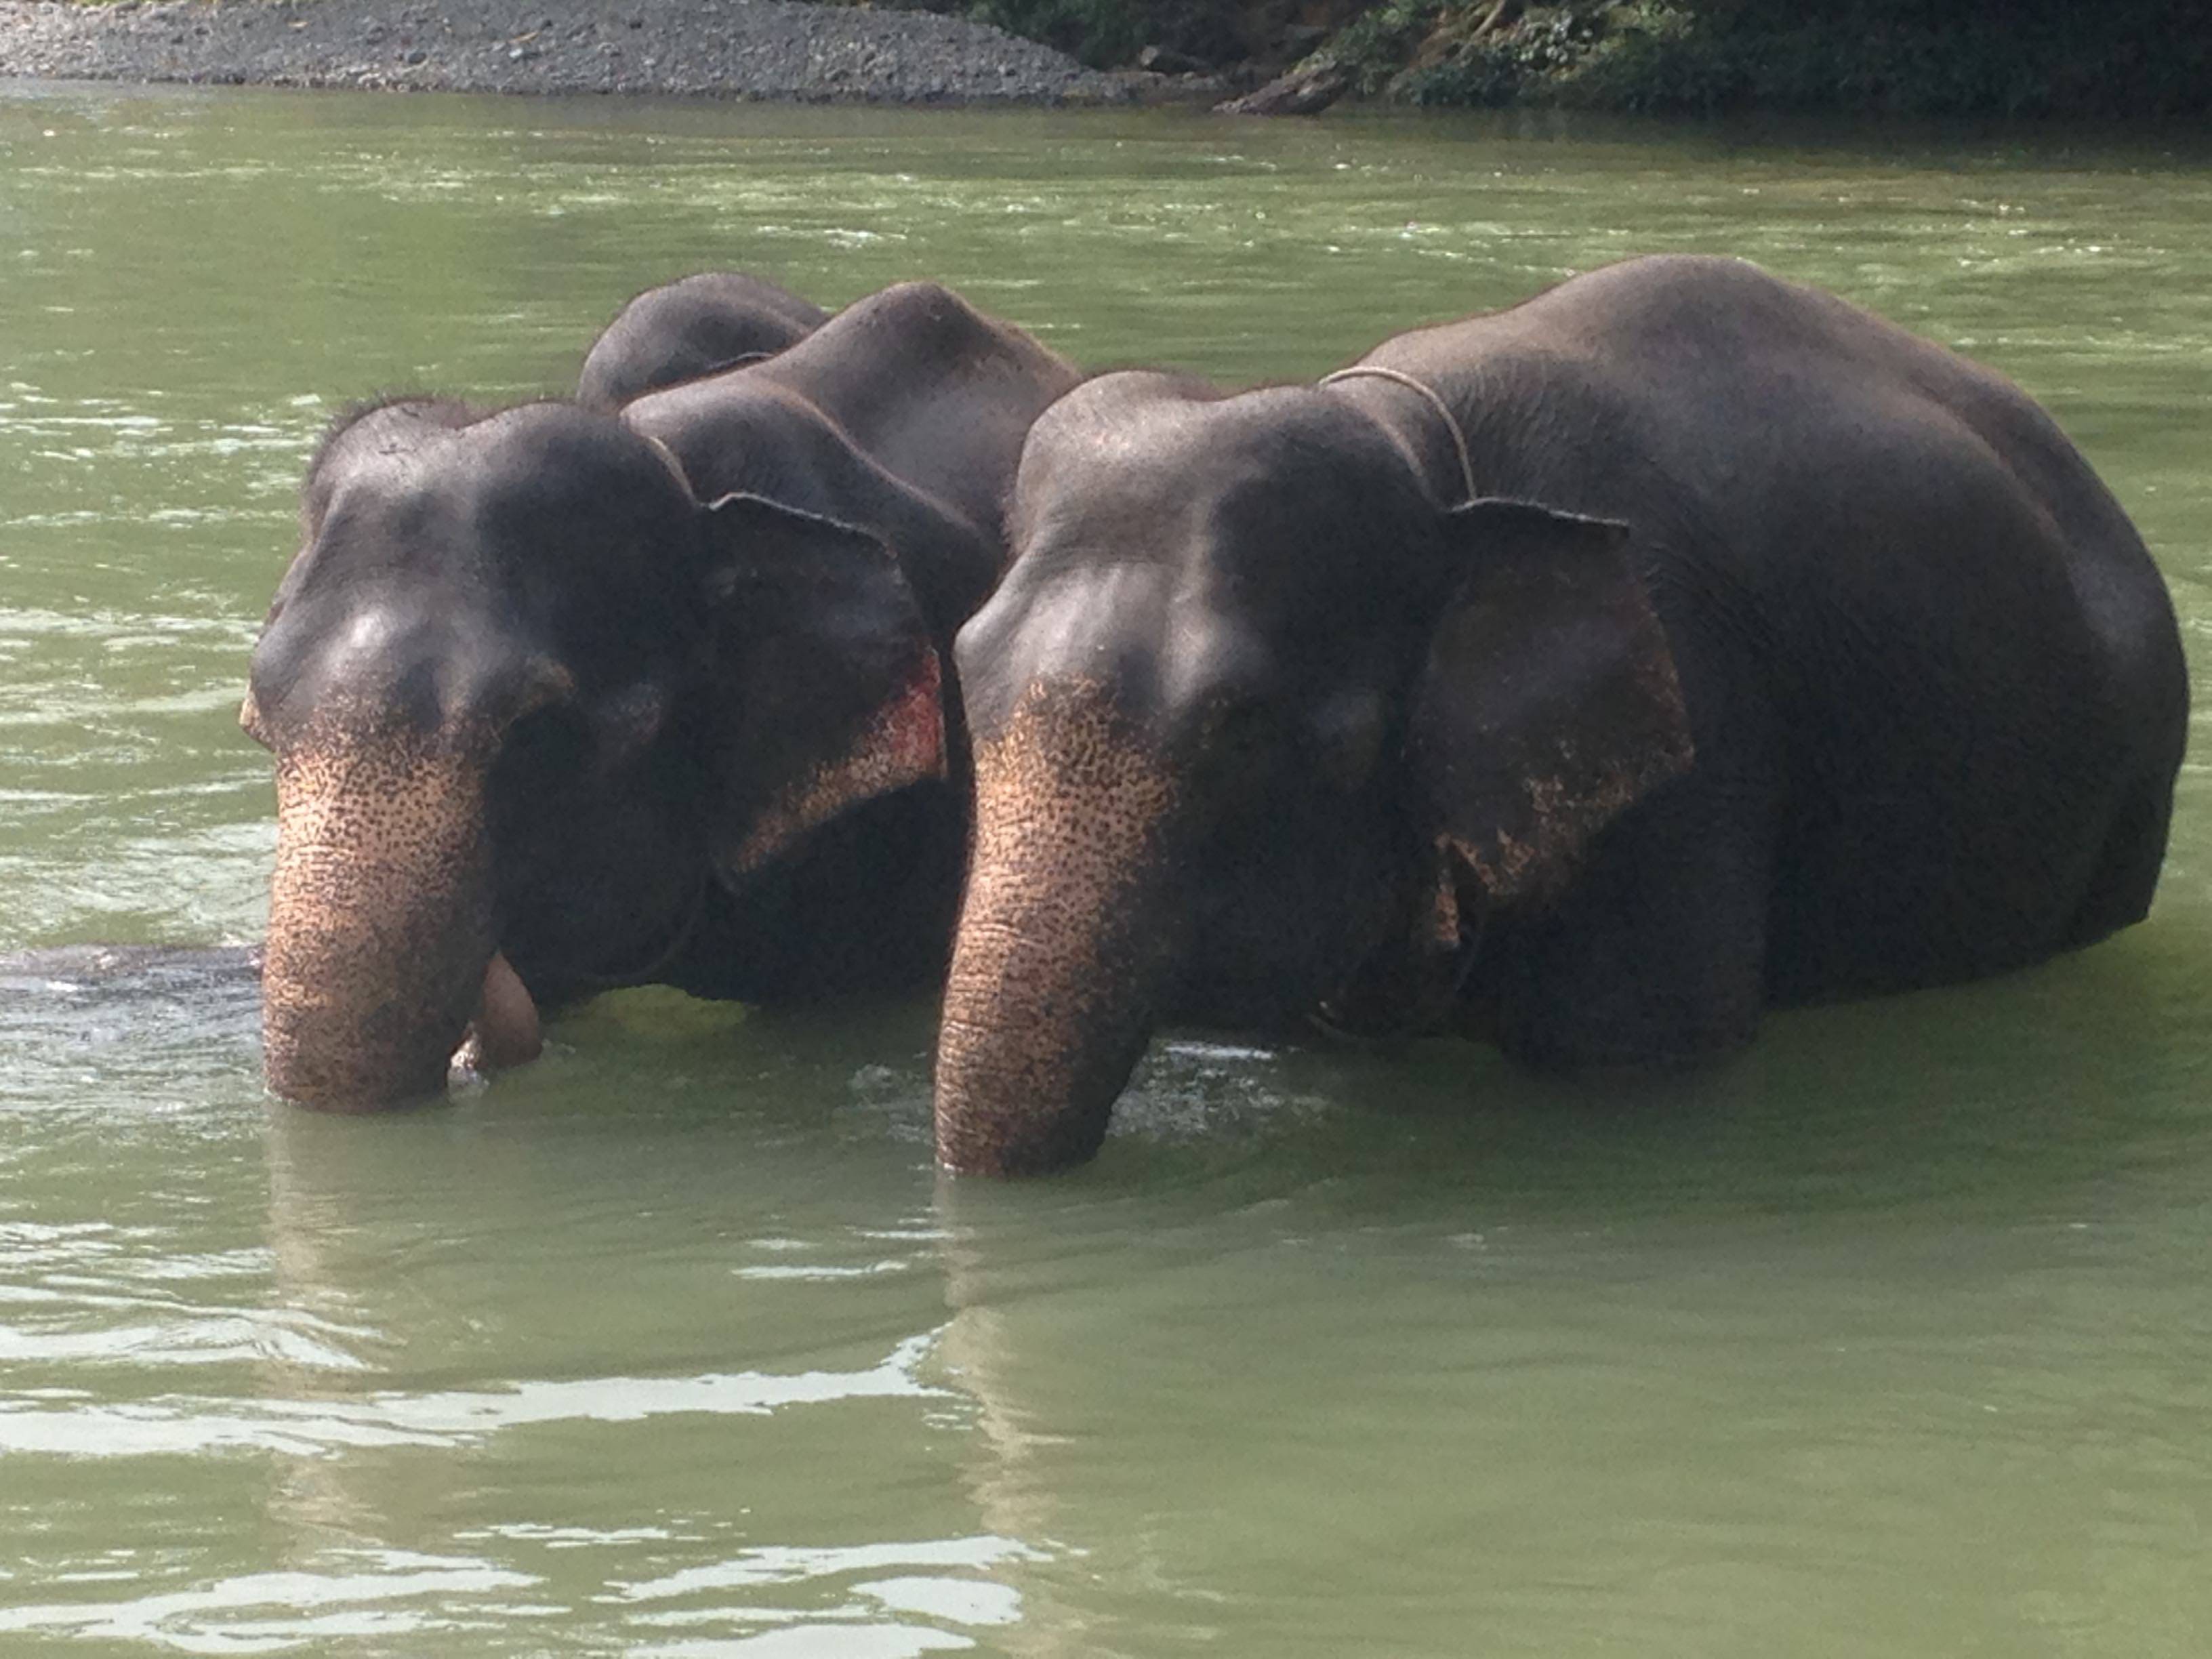 Tangkahan Elephant Sanctuary